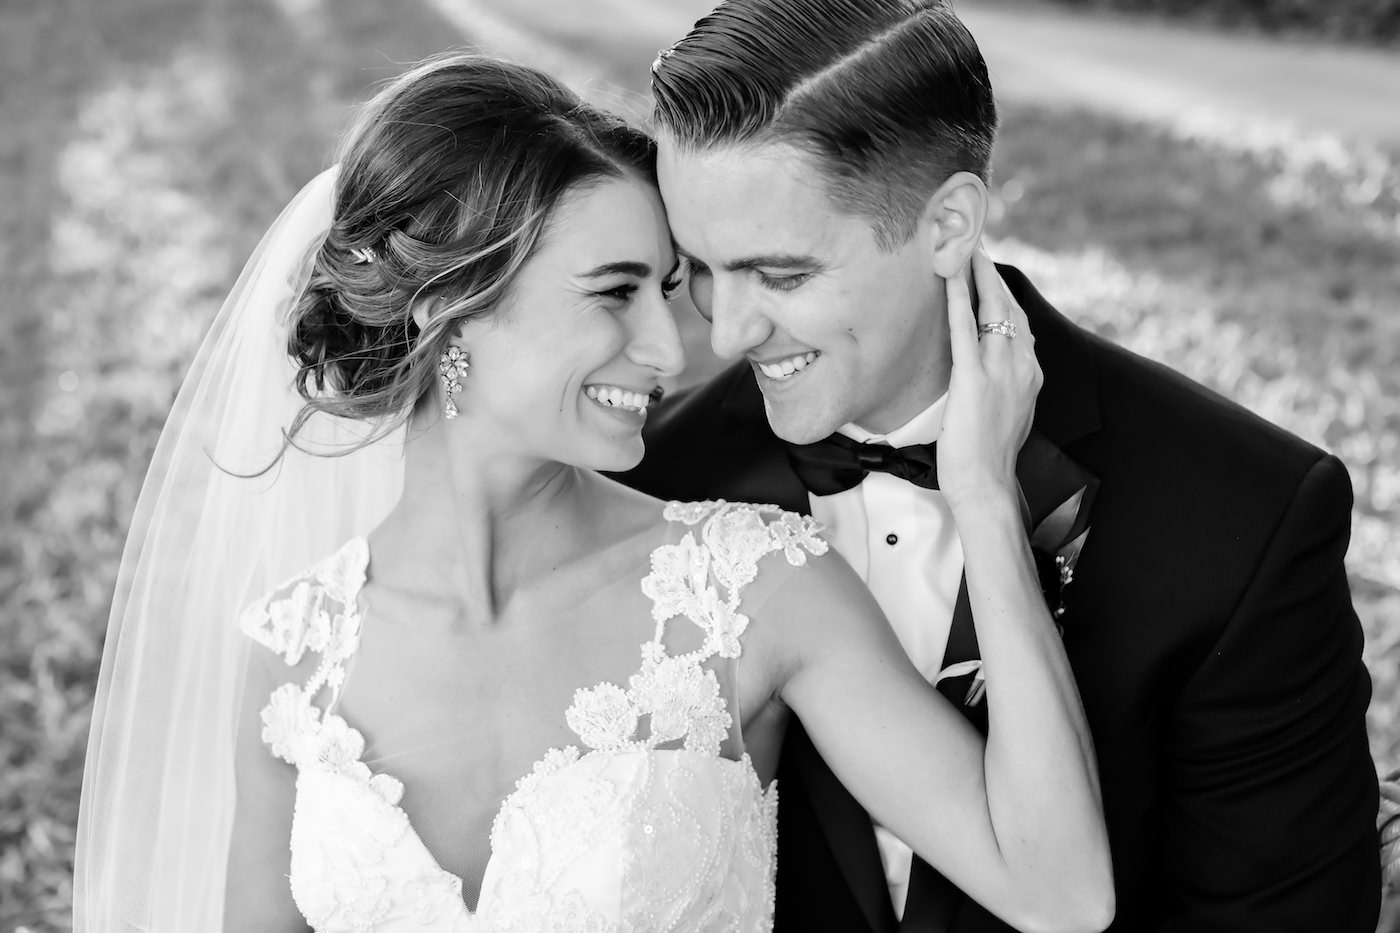 Black and White Classic Bride and Groom Emotional Wedding Portrait | Wedding Photographer Lifelong Photography Studio